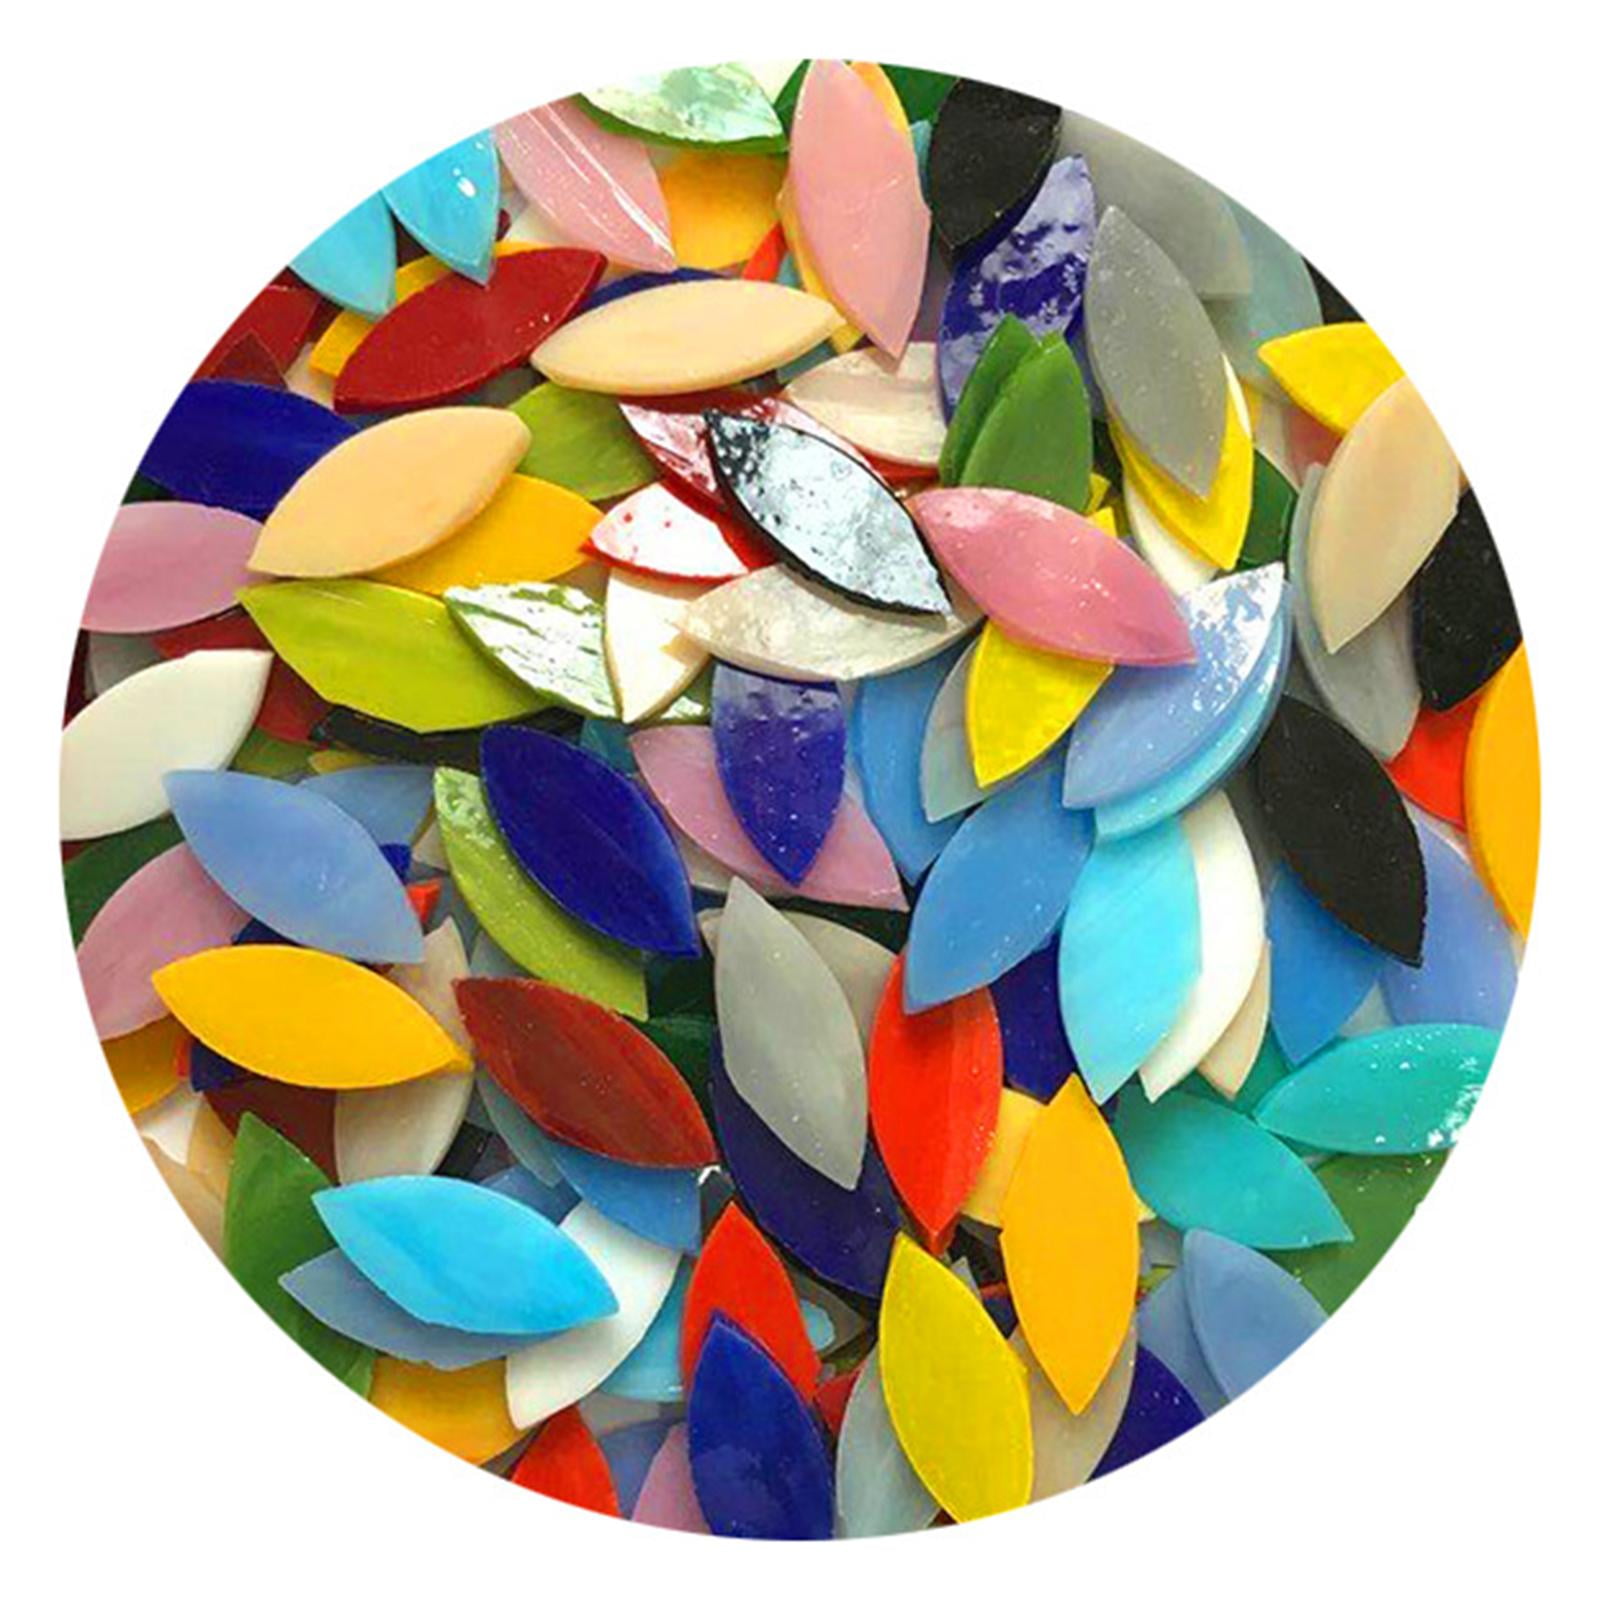 100g/Pack Mixed Color Irregular Iridescent Glass Mosaic Sheets